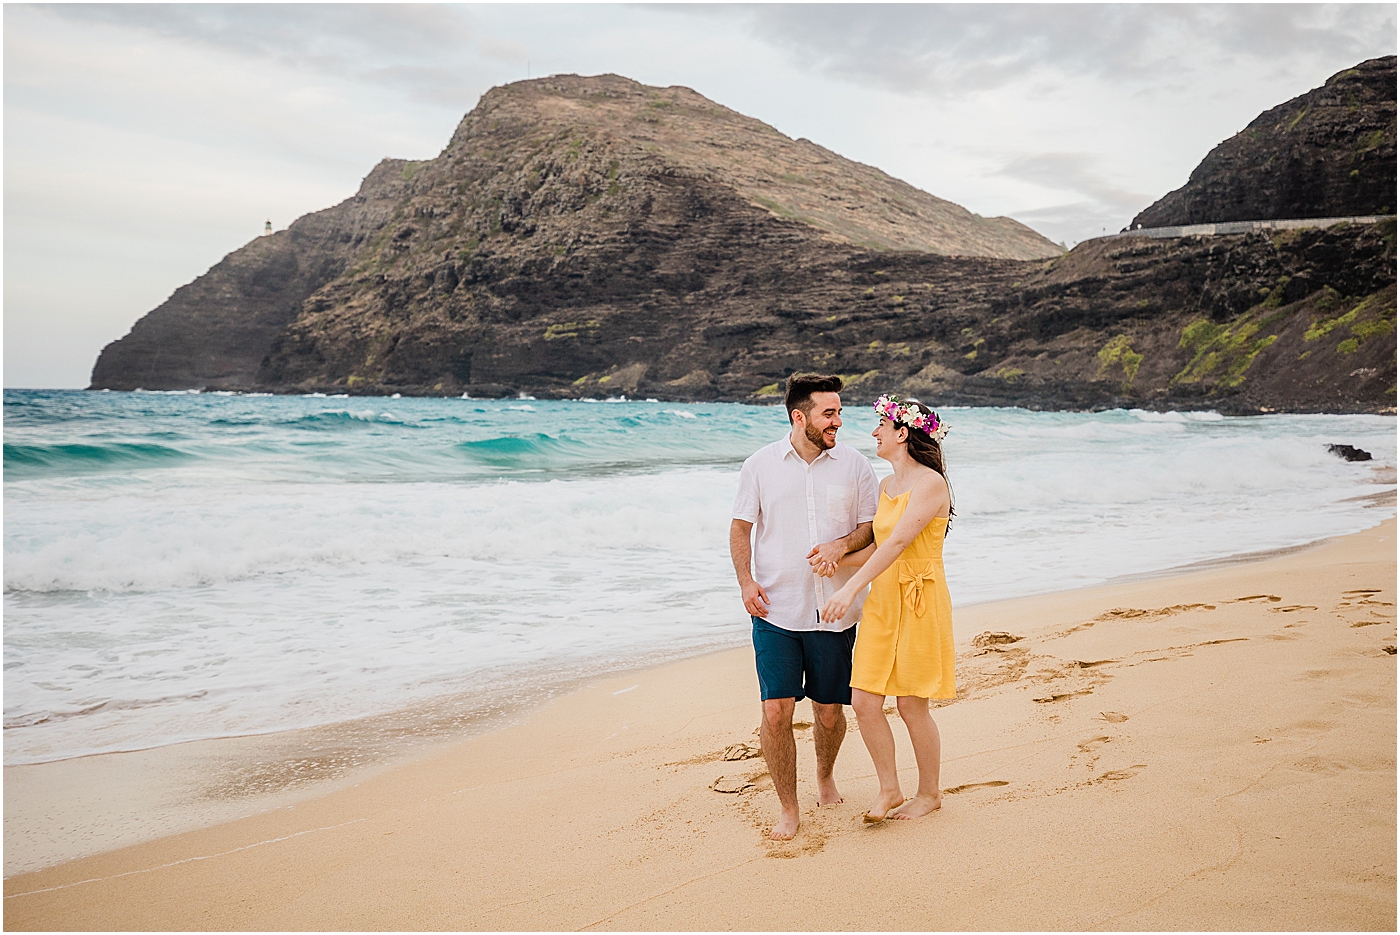 Newlywed couple on the beach during their honeymoon in hawaii